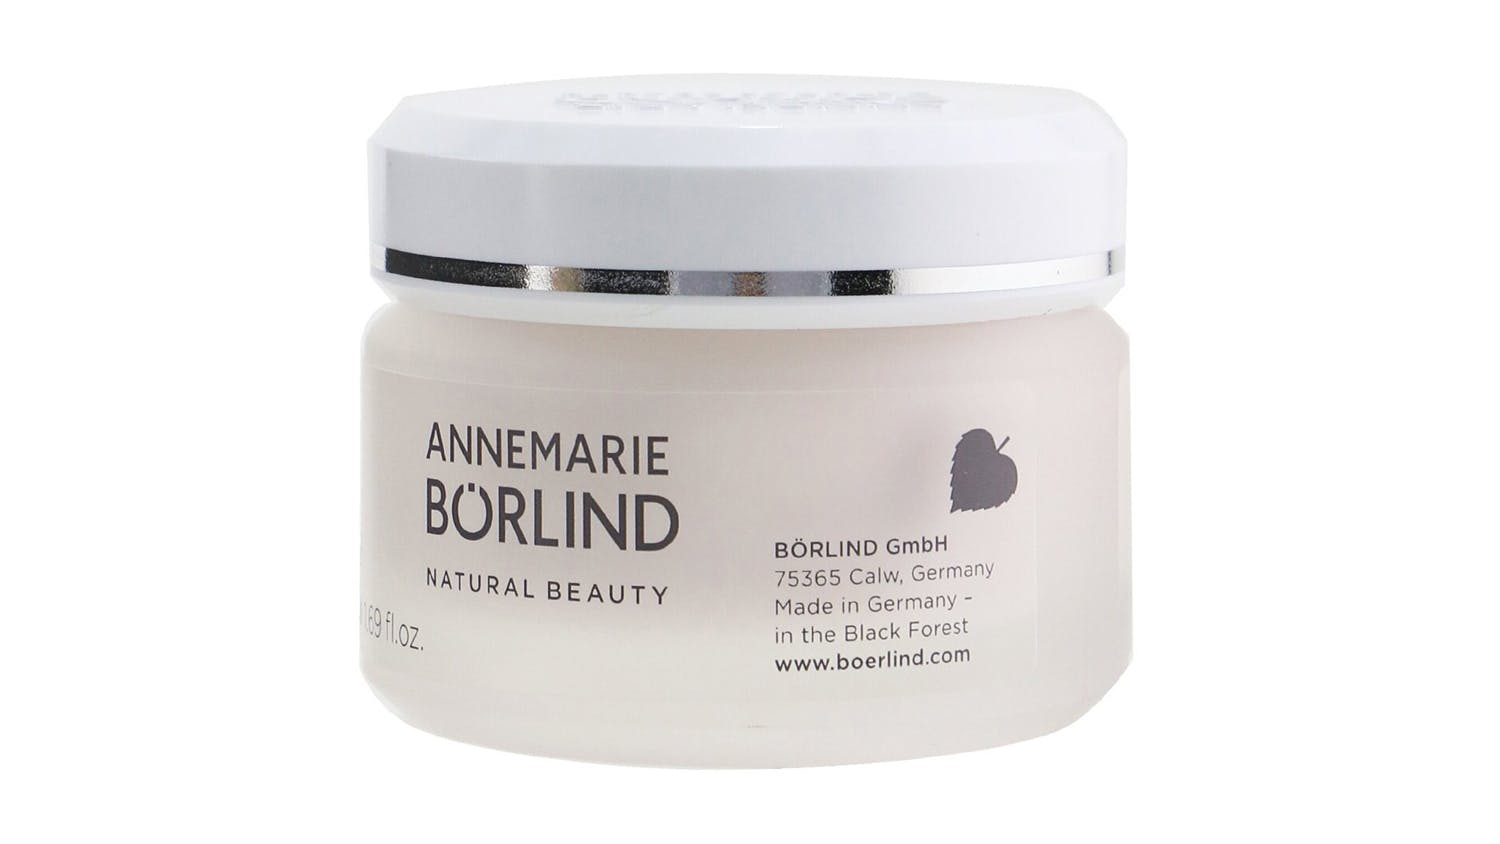 Annemarie Borlind Energynature System Pre-Ageing Regenerative Night Cream - For Normal to Dry Skin - 50ml/1.69oz